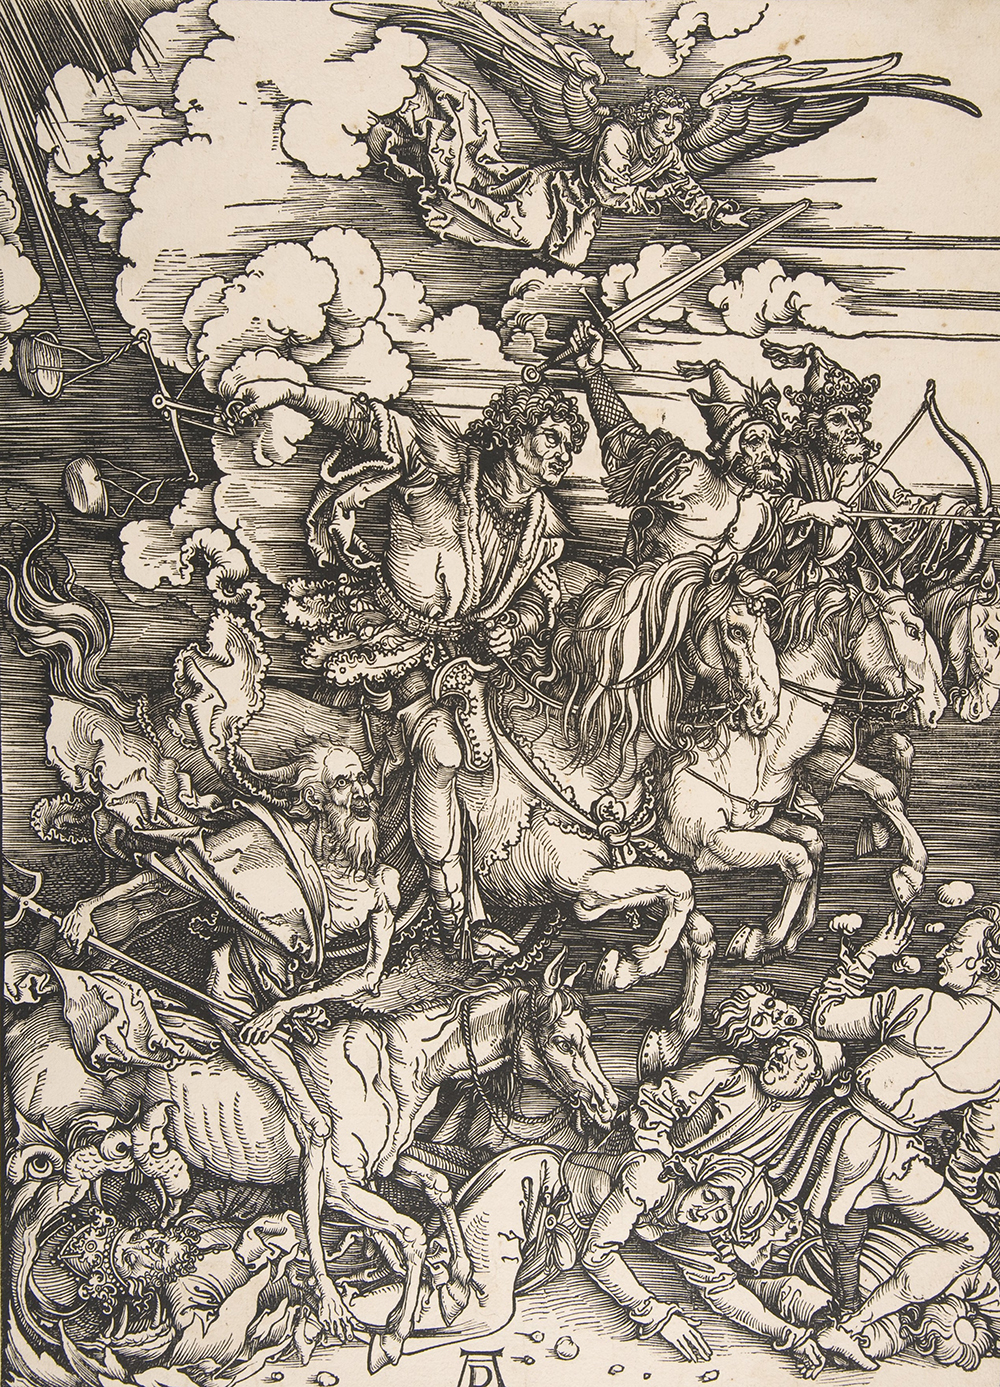 The Four Horsemen of the Apocalypse, by Albrecht Dürer, c. 1497